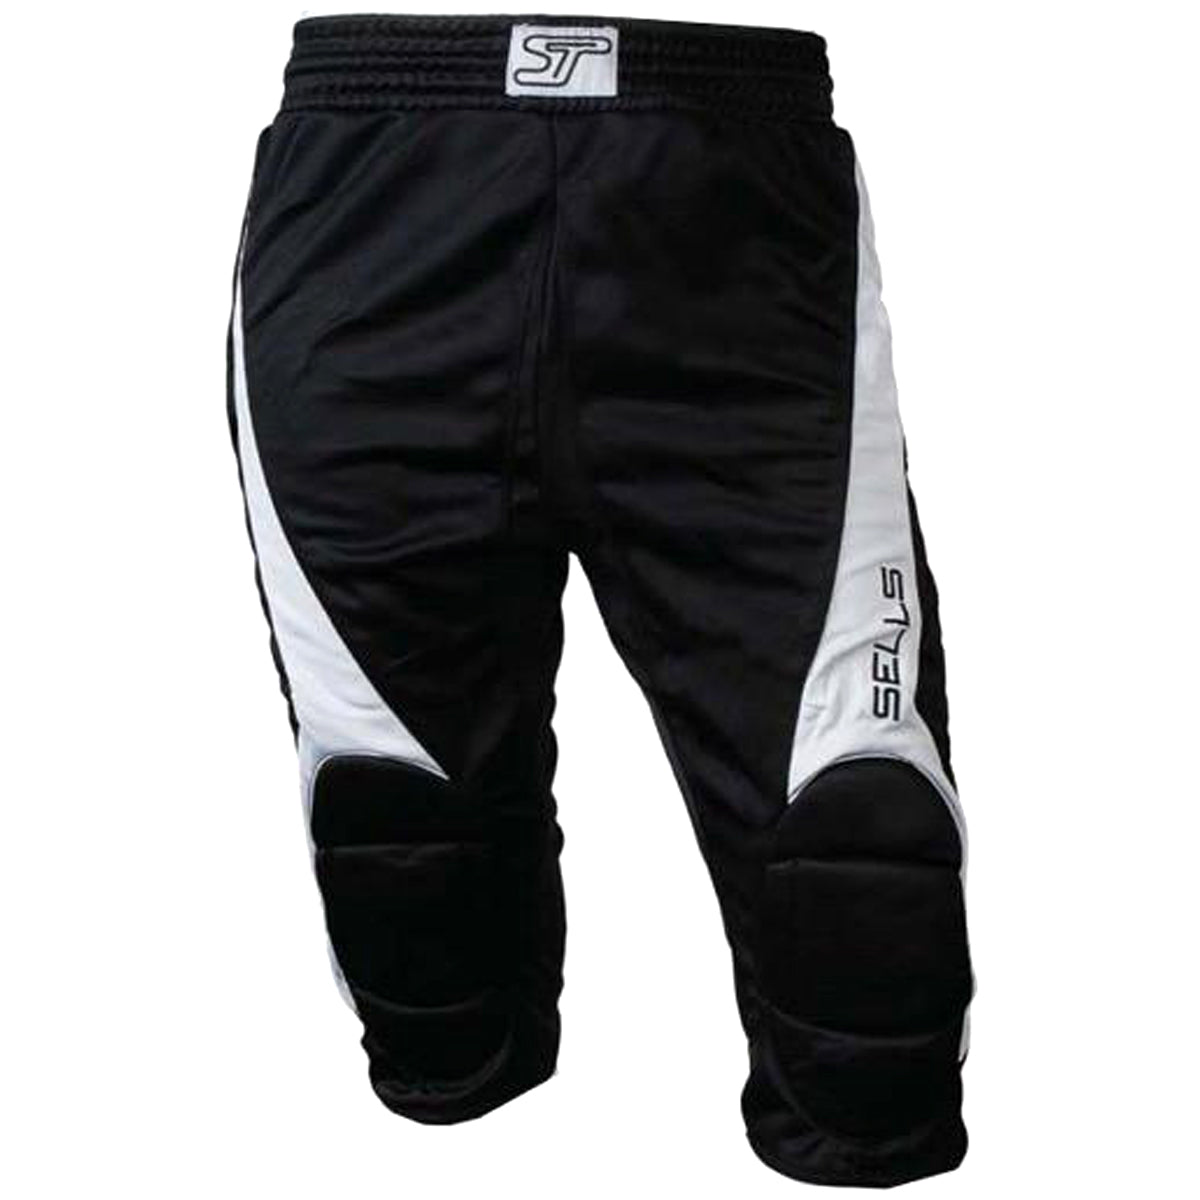 Sells Supreme Goalkeeper 3/4 Pants Goalkeeper Gear Sells Small Black/White 